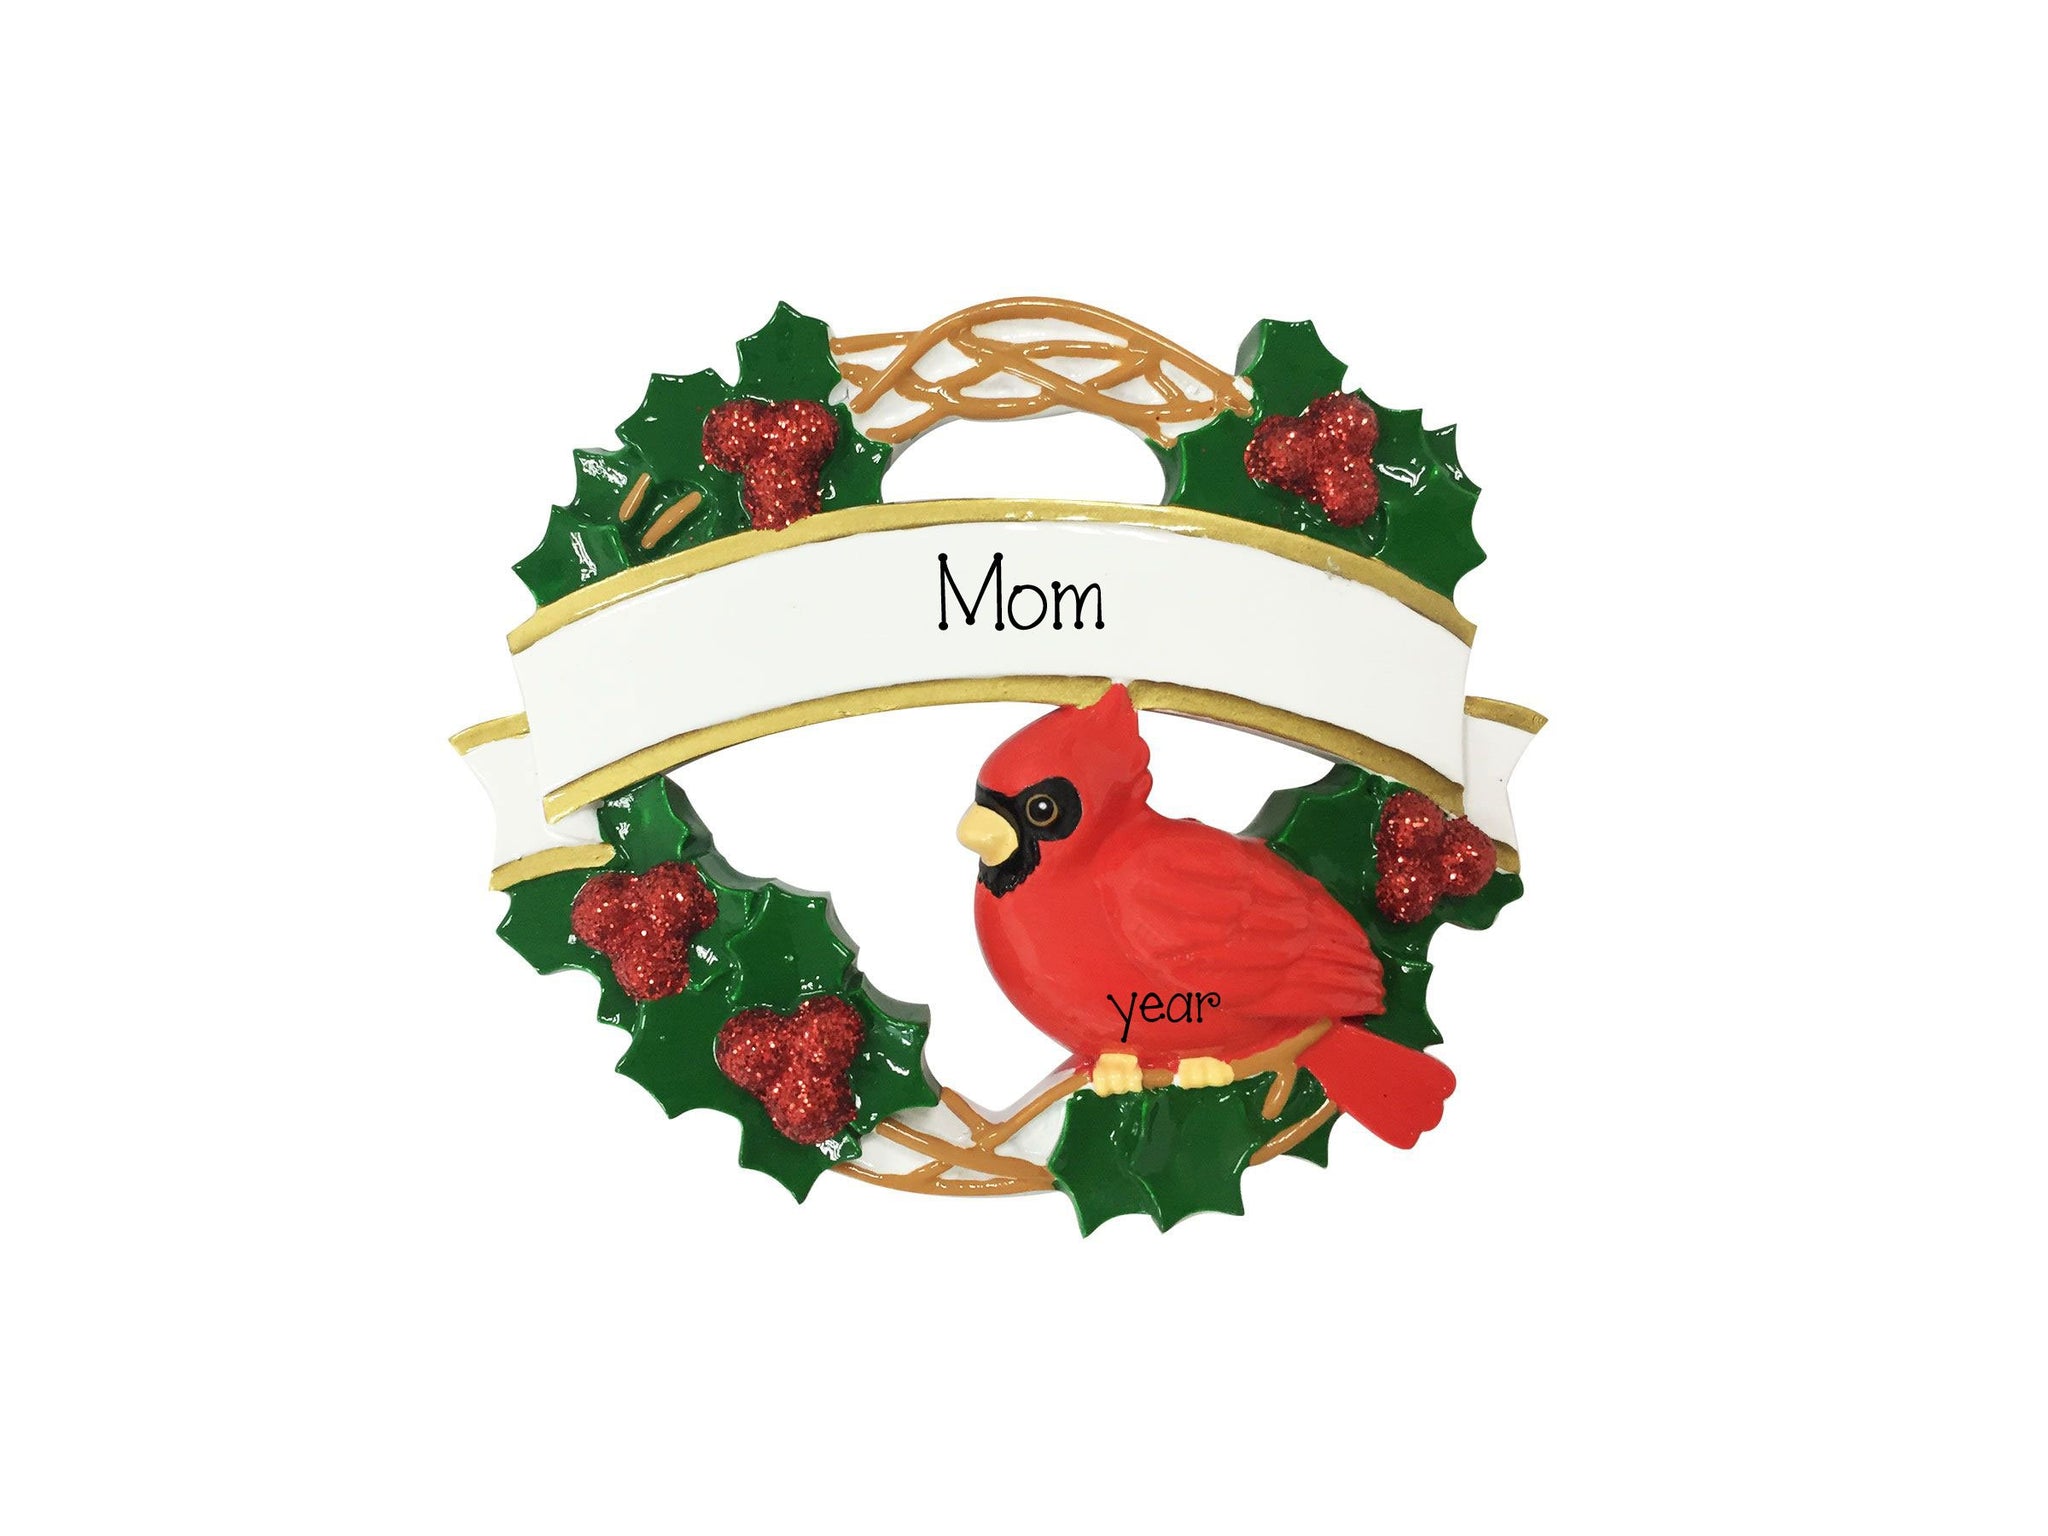 Cardinal Christmas Ornaments Gift For Your Neighbors Ornament Good